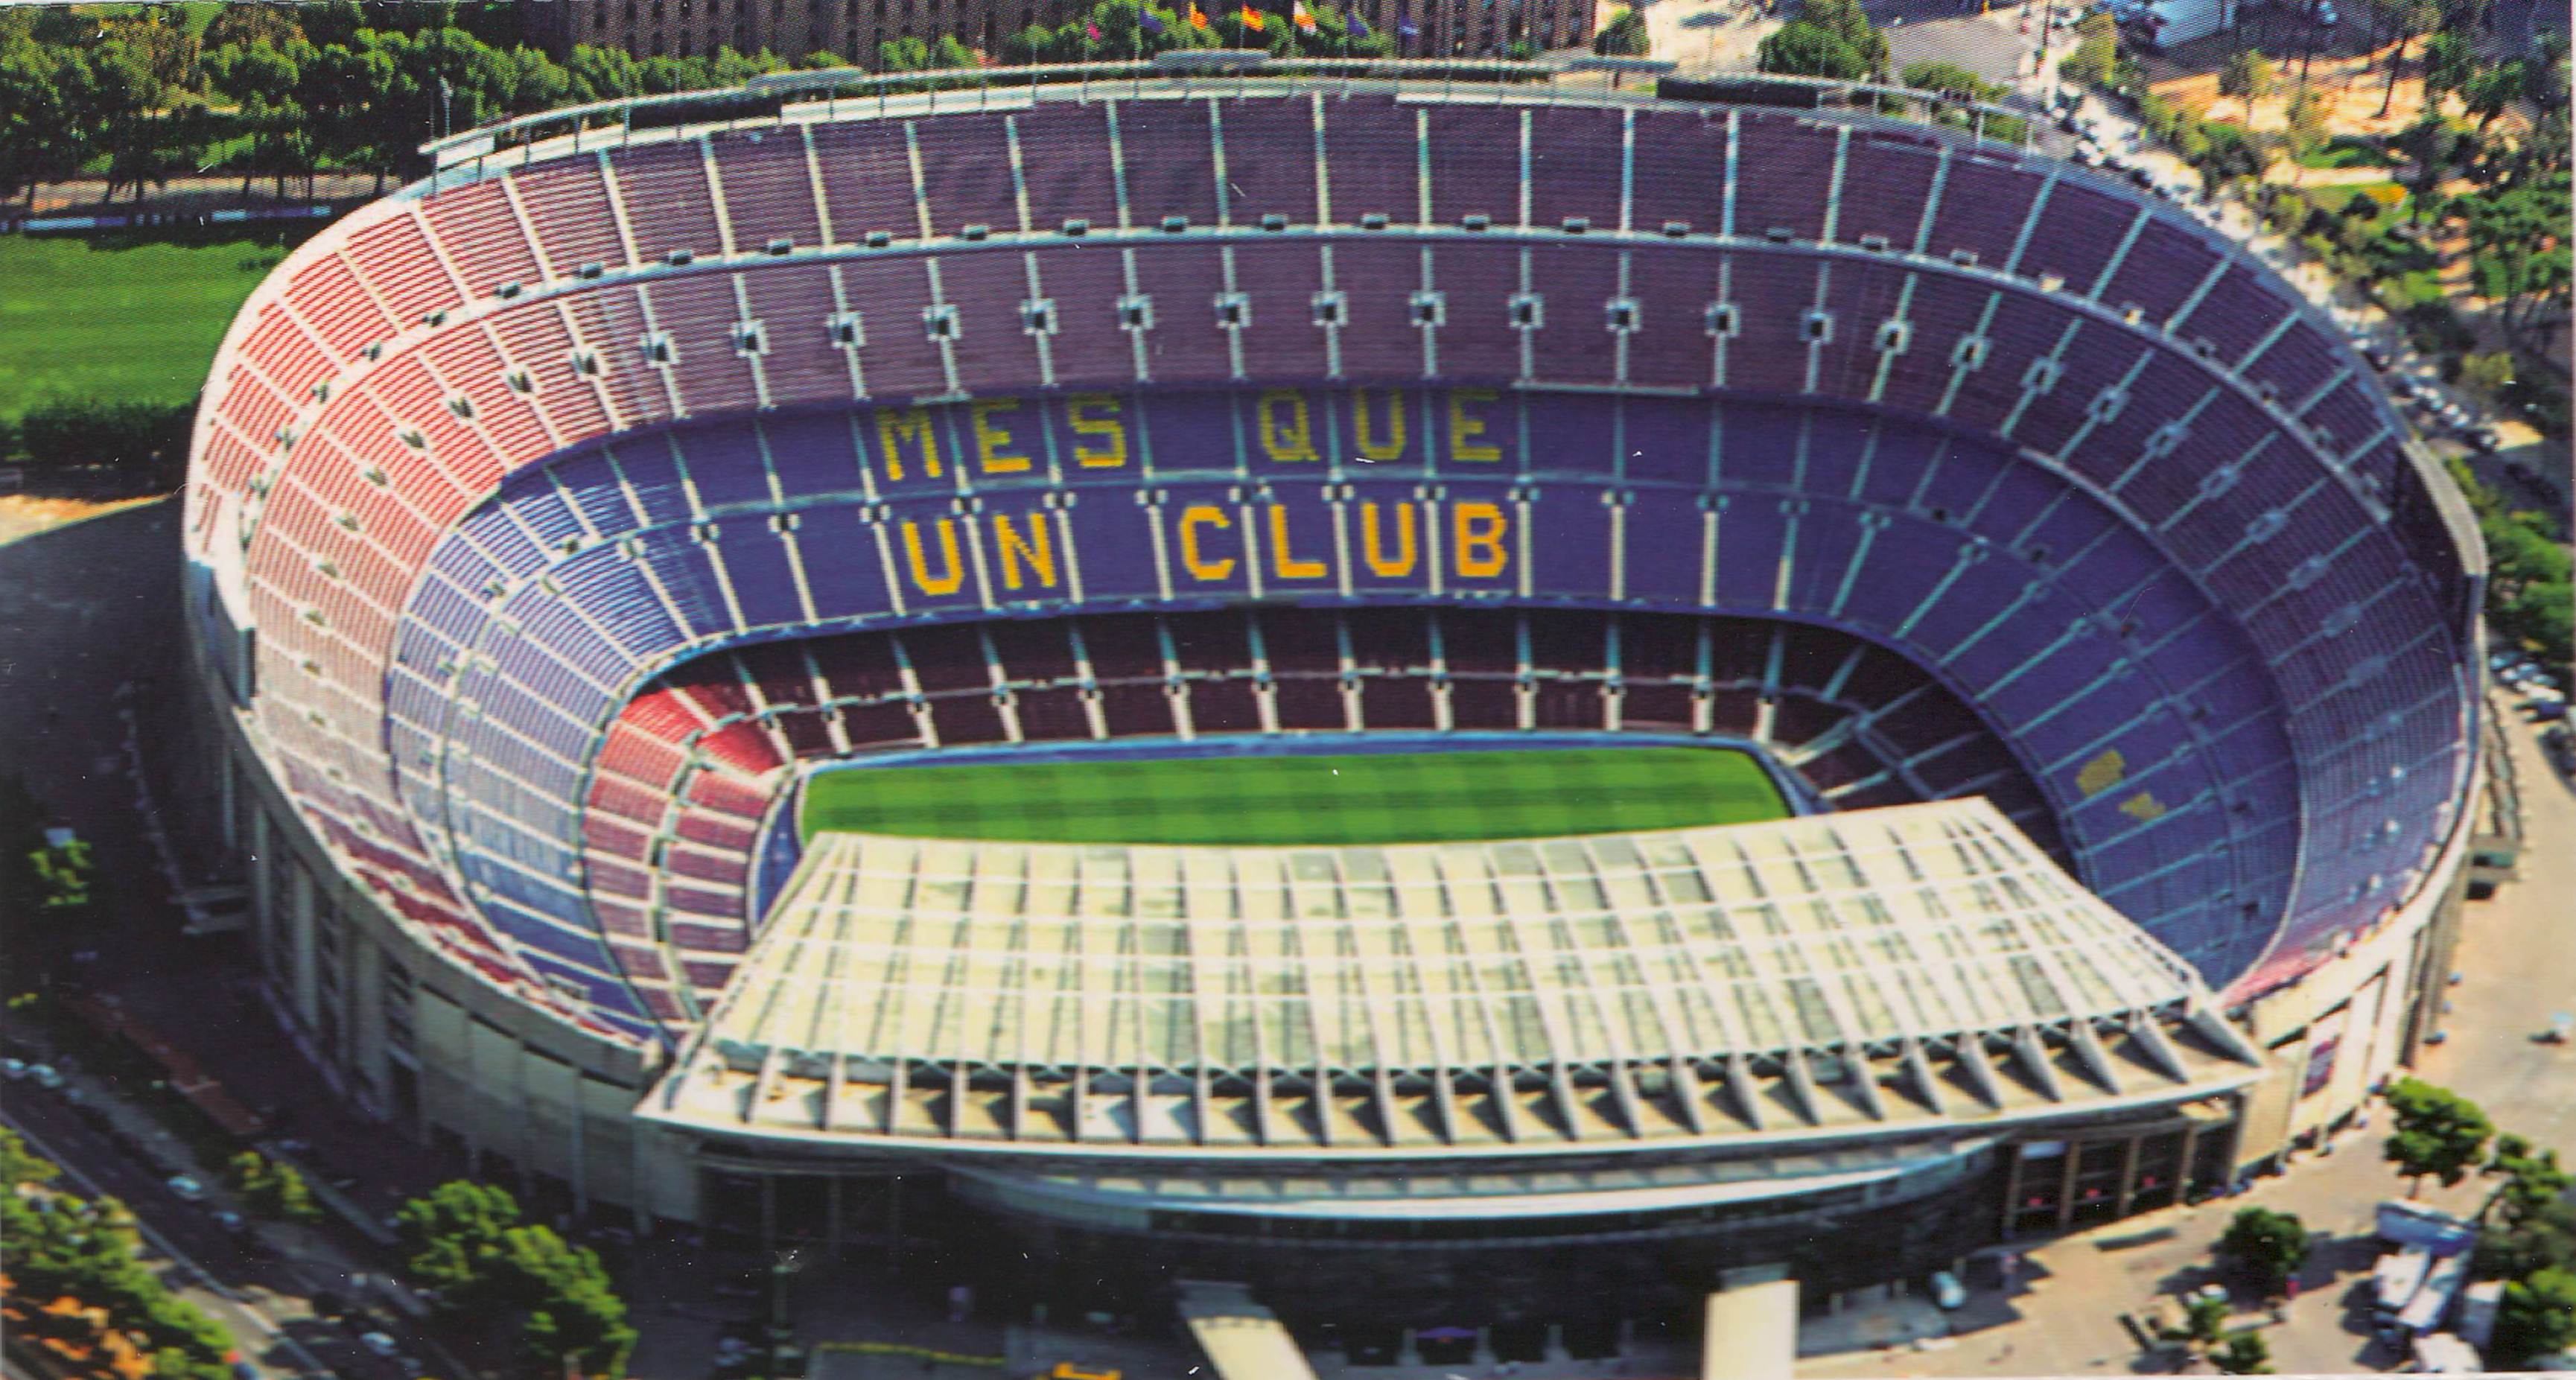 Камп нов. Стадион Камп ноу в Барселоне. Барселона стадион Camp nou. Барселона ноукамб стадион. Камп ноу стадион 2022.